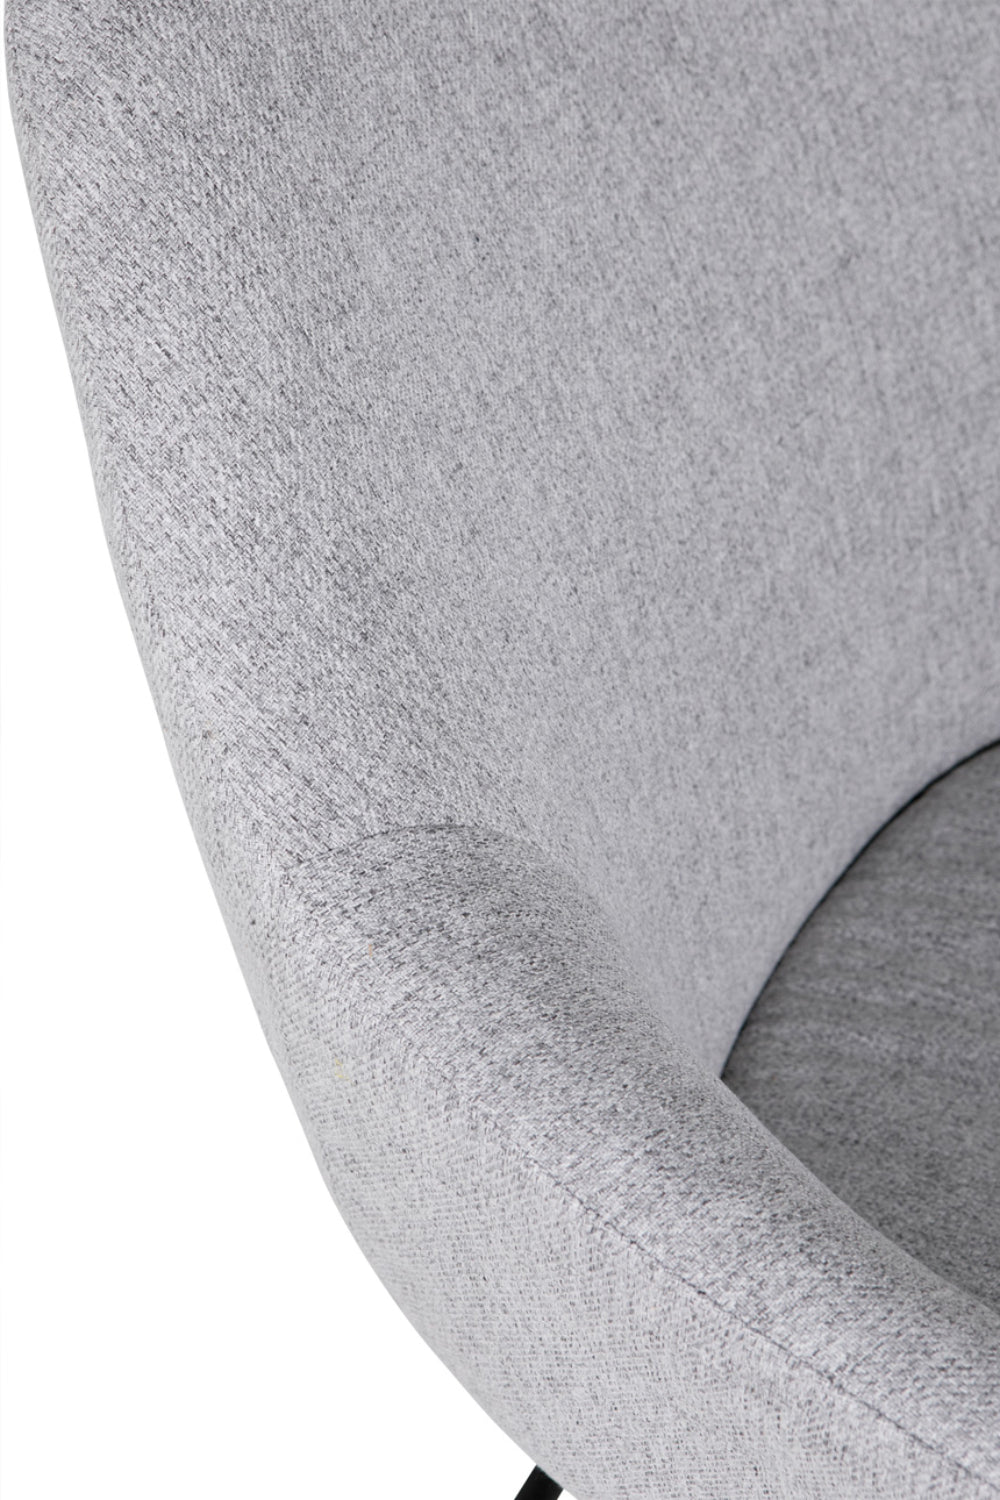 Opal Accent Chair Grey Armrest Detail